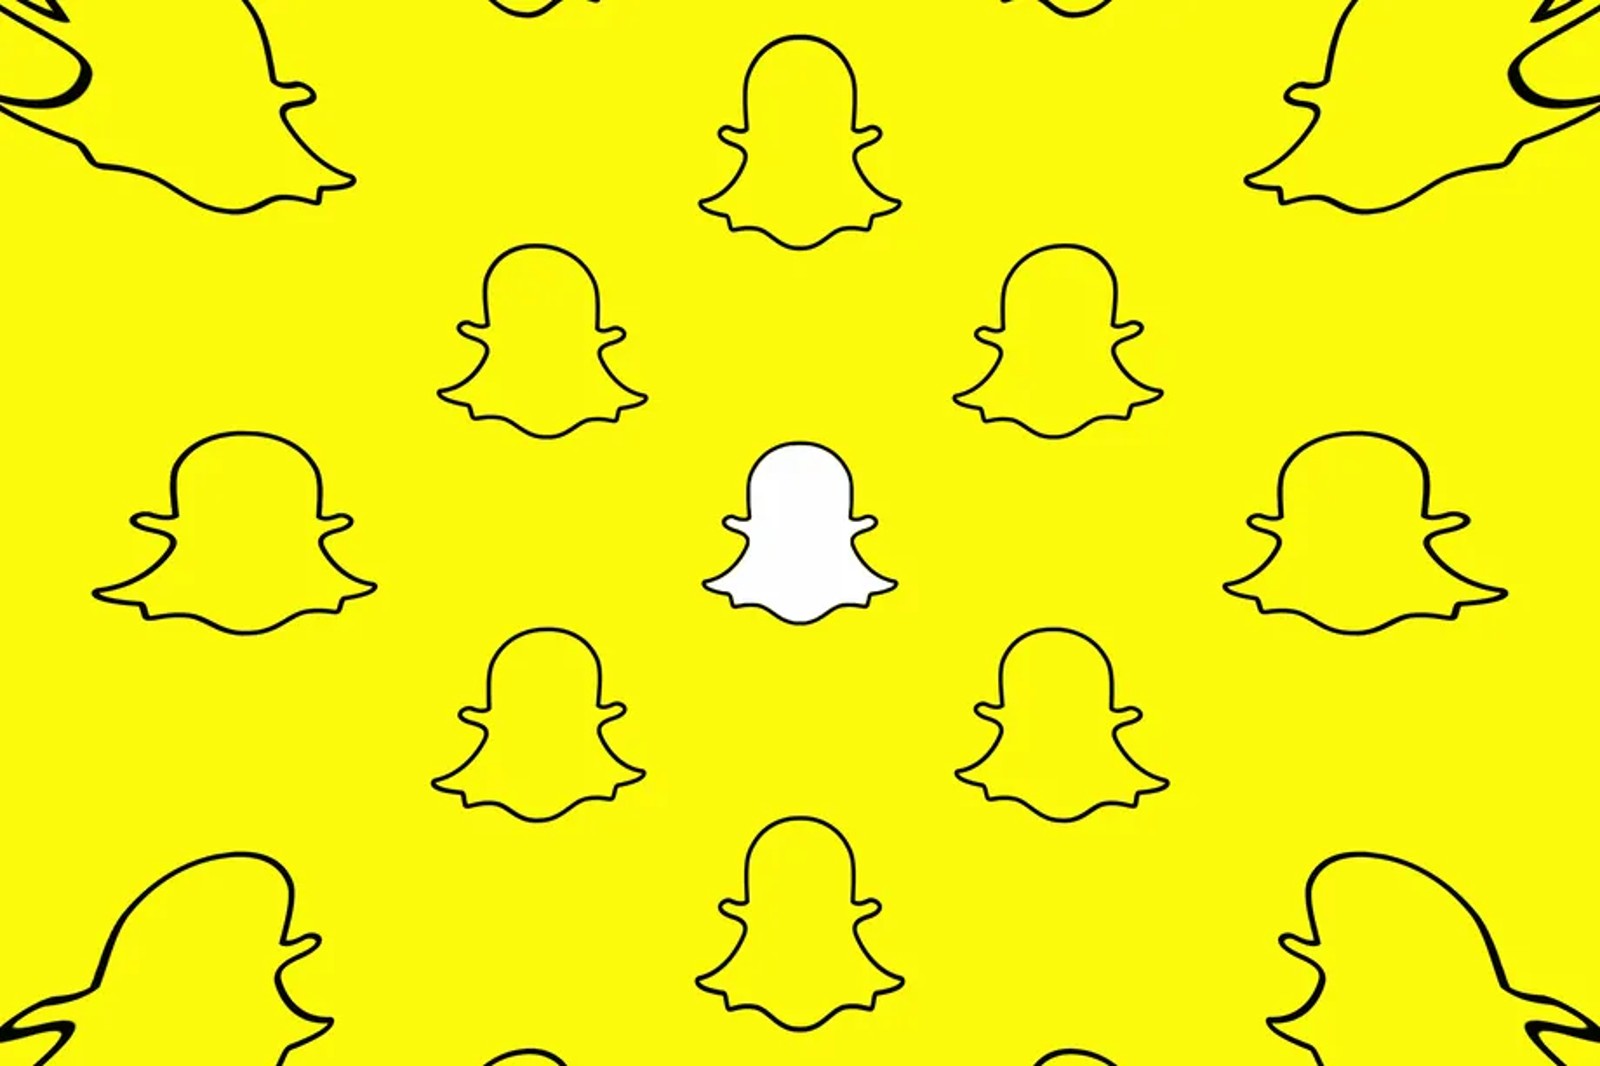 Snapchat: θα απολύσει το 20% των 6.500 εργαζομένων του, λόγω της ύφεσης στη διαφήμιση